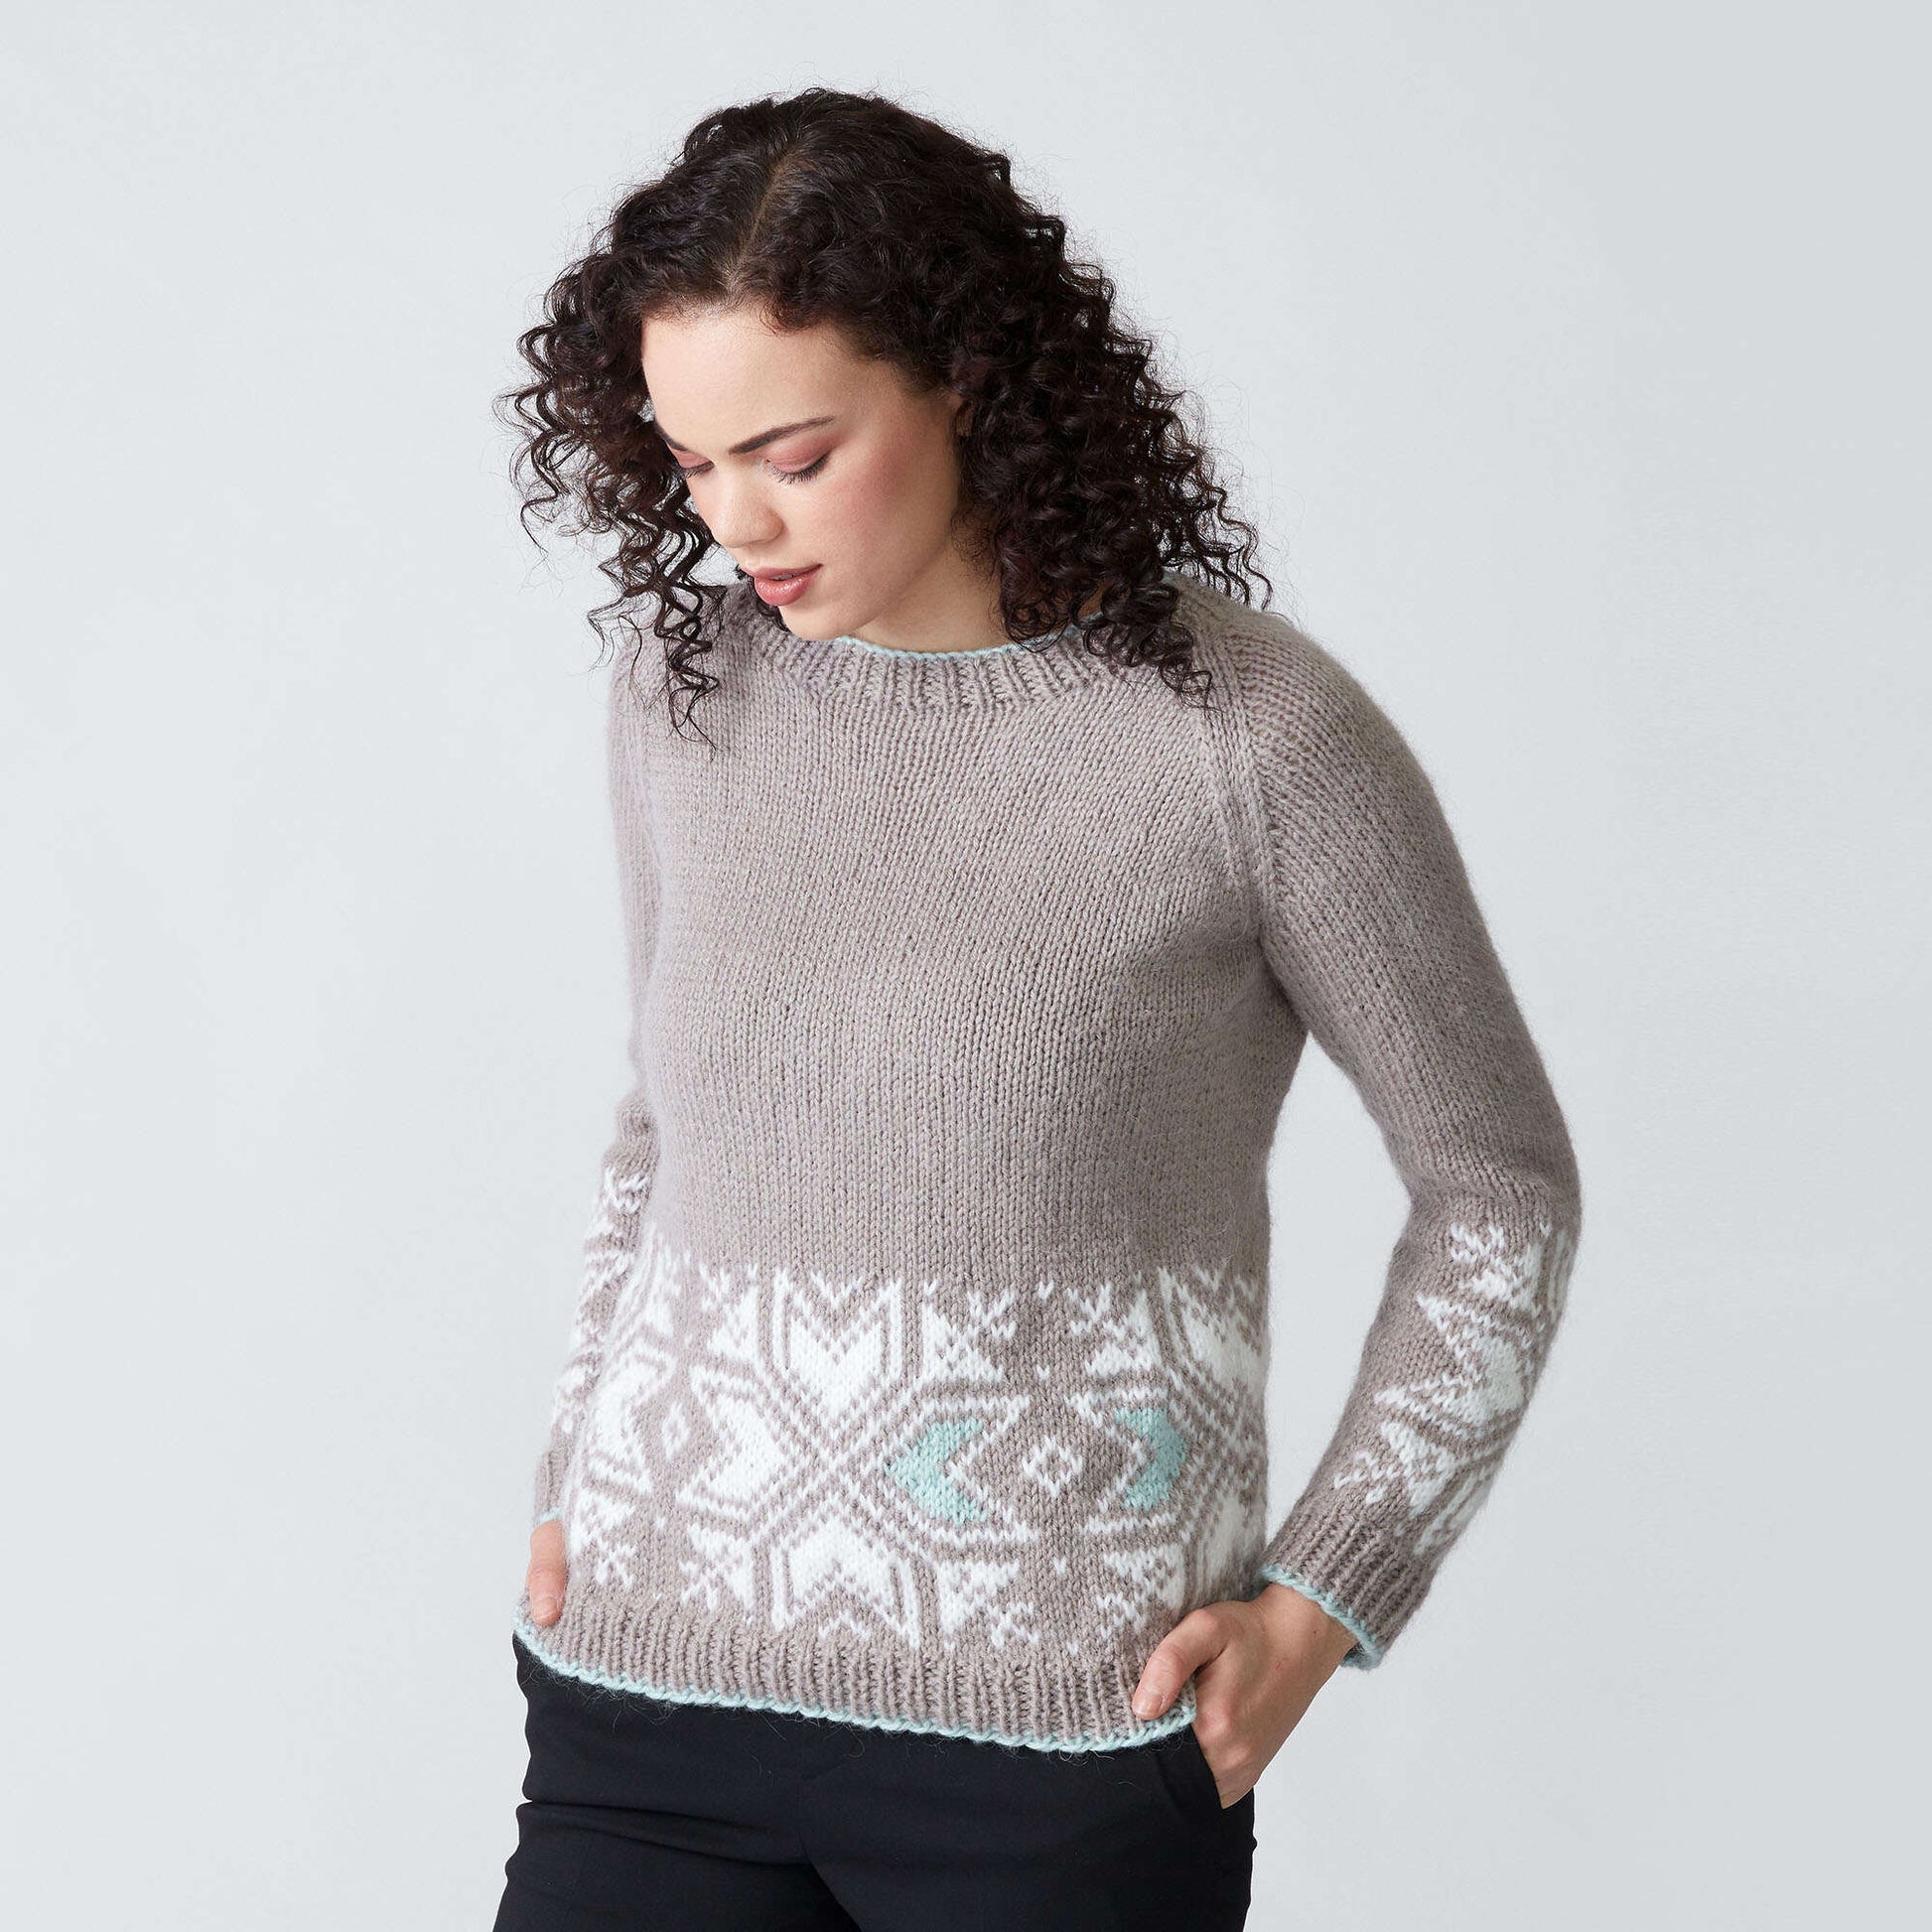 Patons Graphic Snowflake Knit Sweater | Yarnspirations